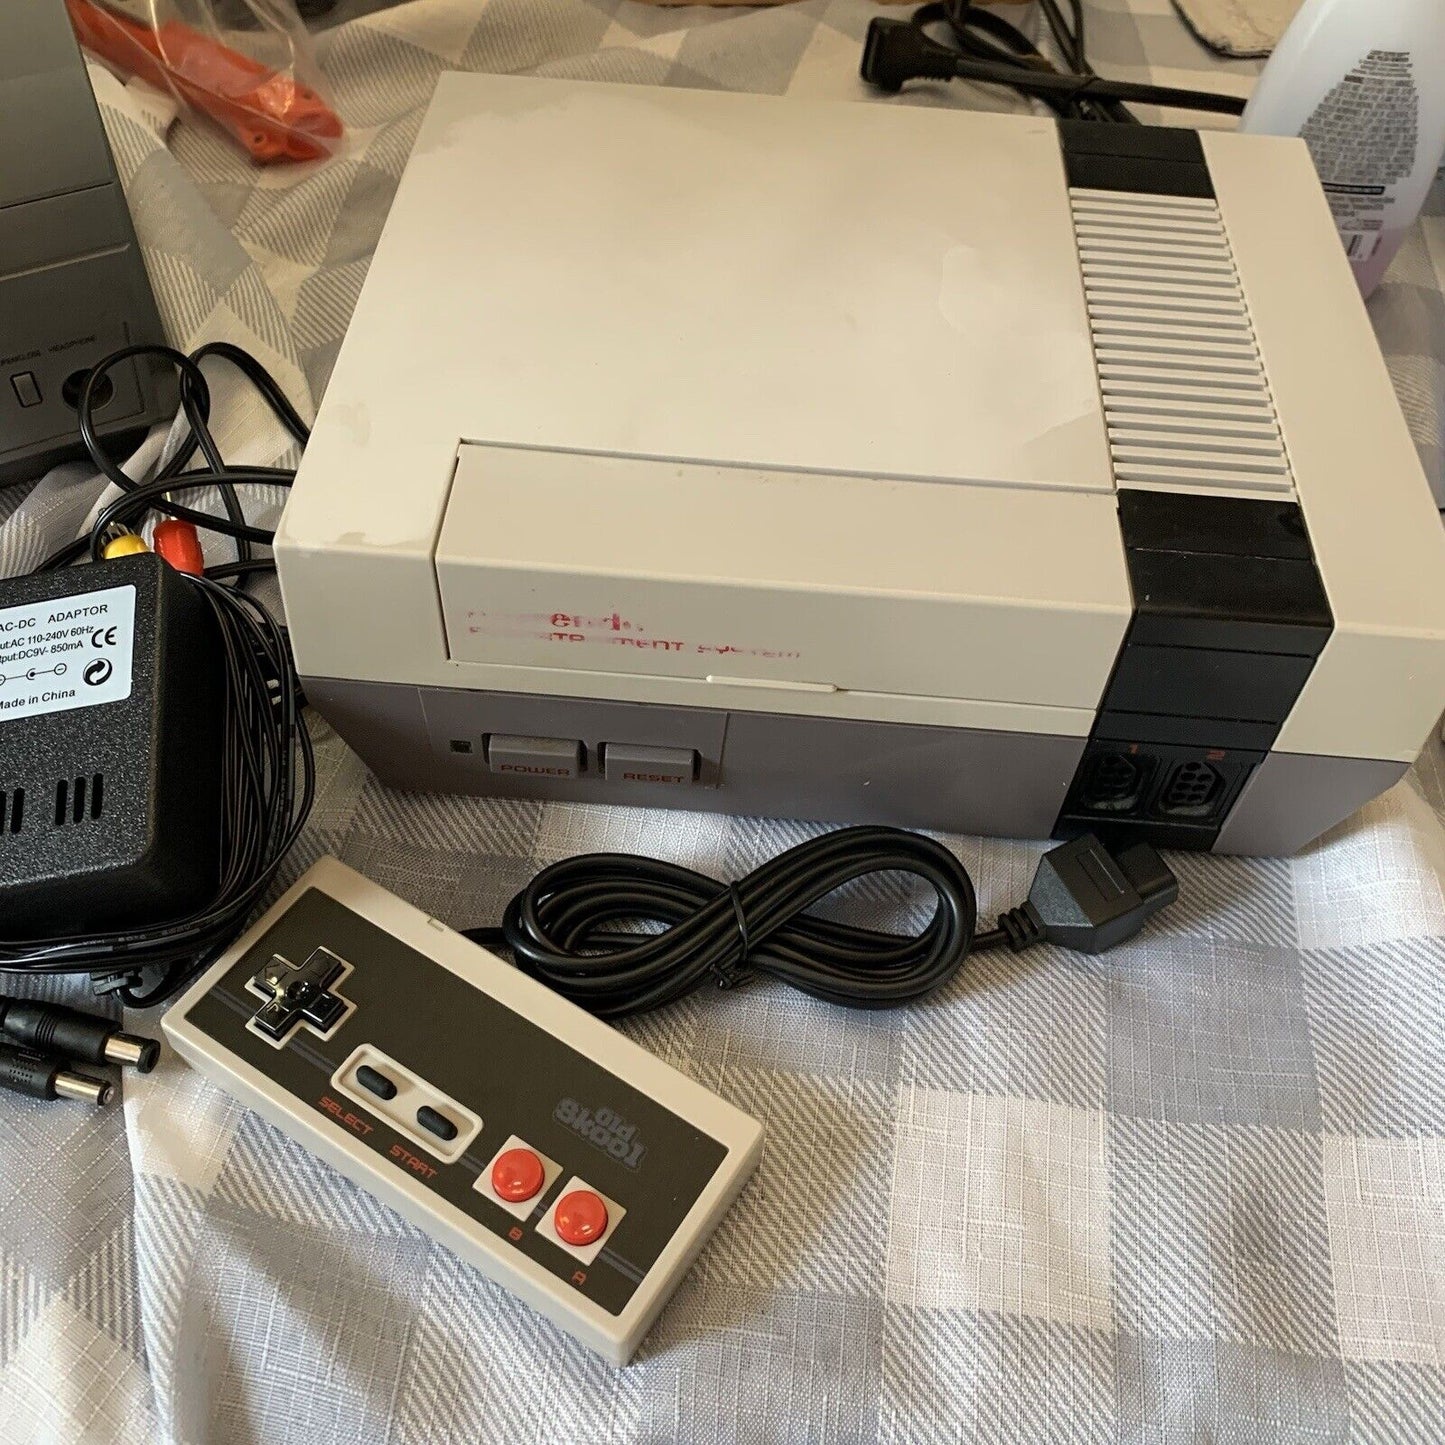 Nintendo NES Action Set Home Console - White/Gray